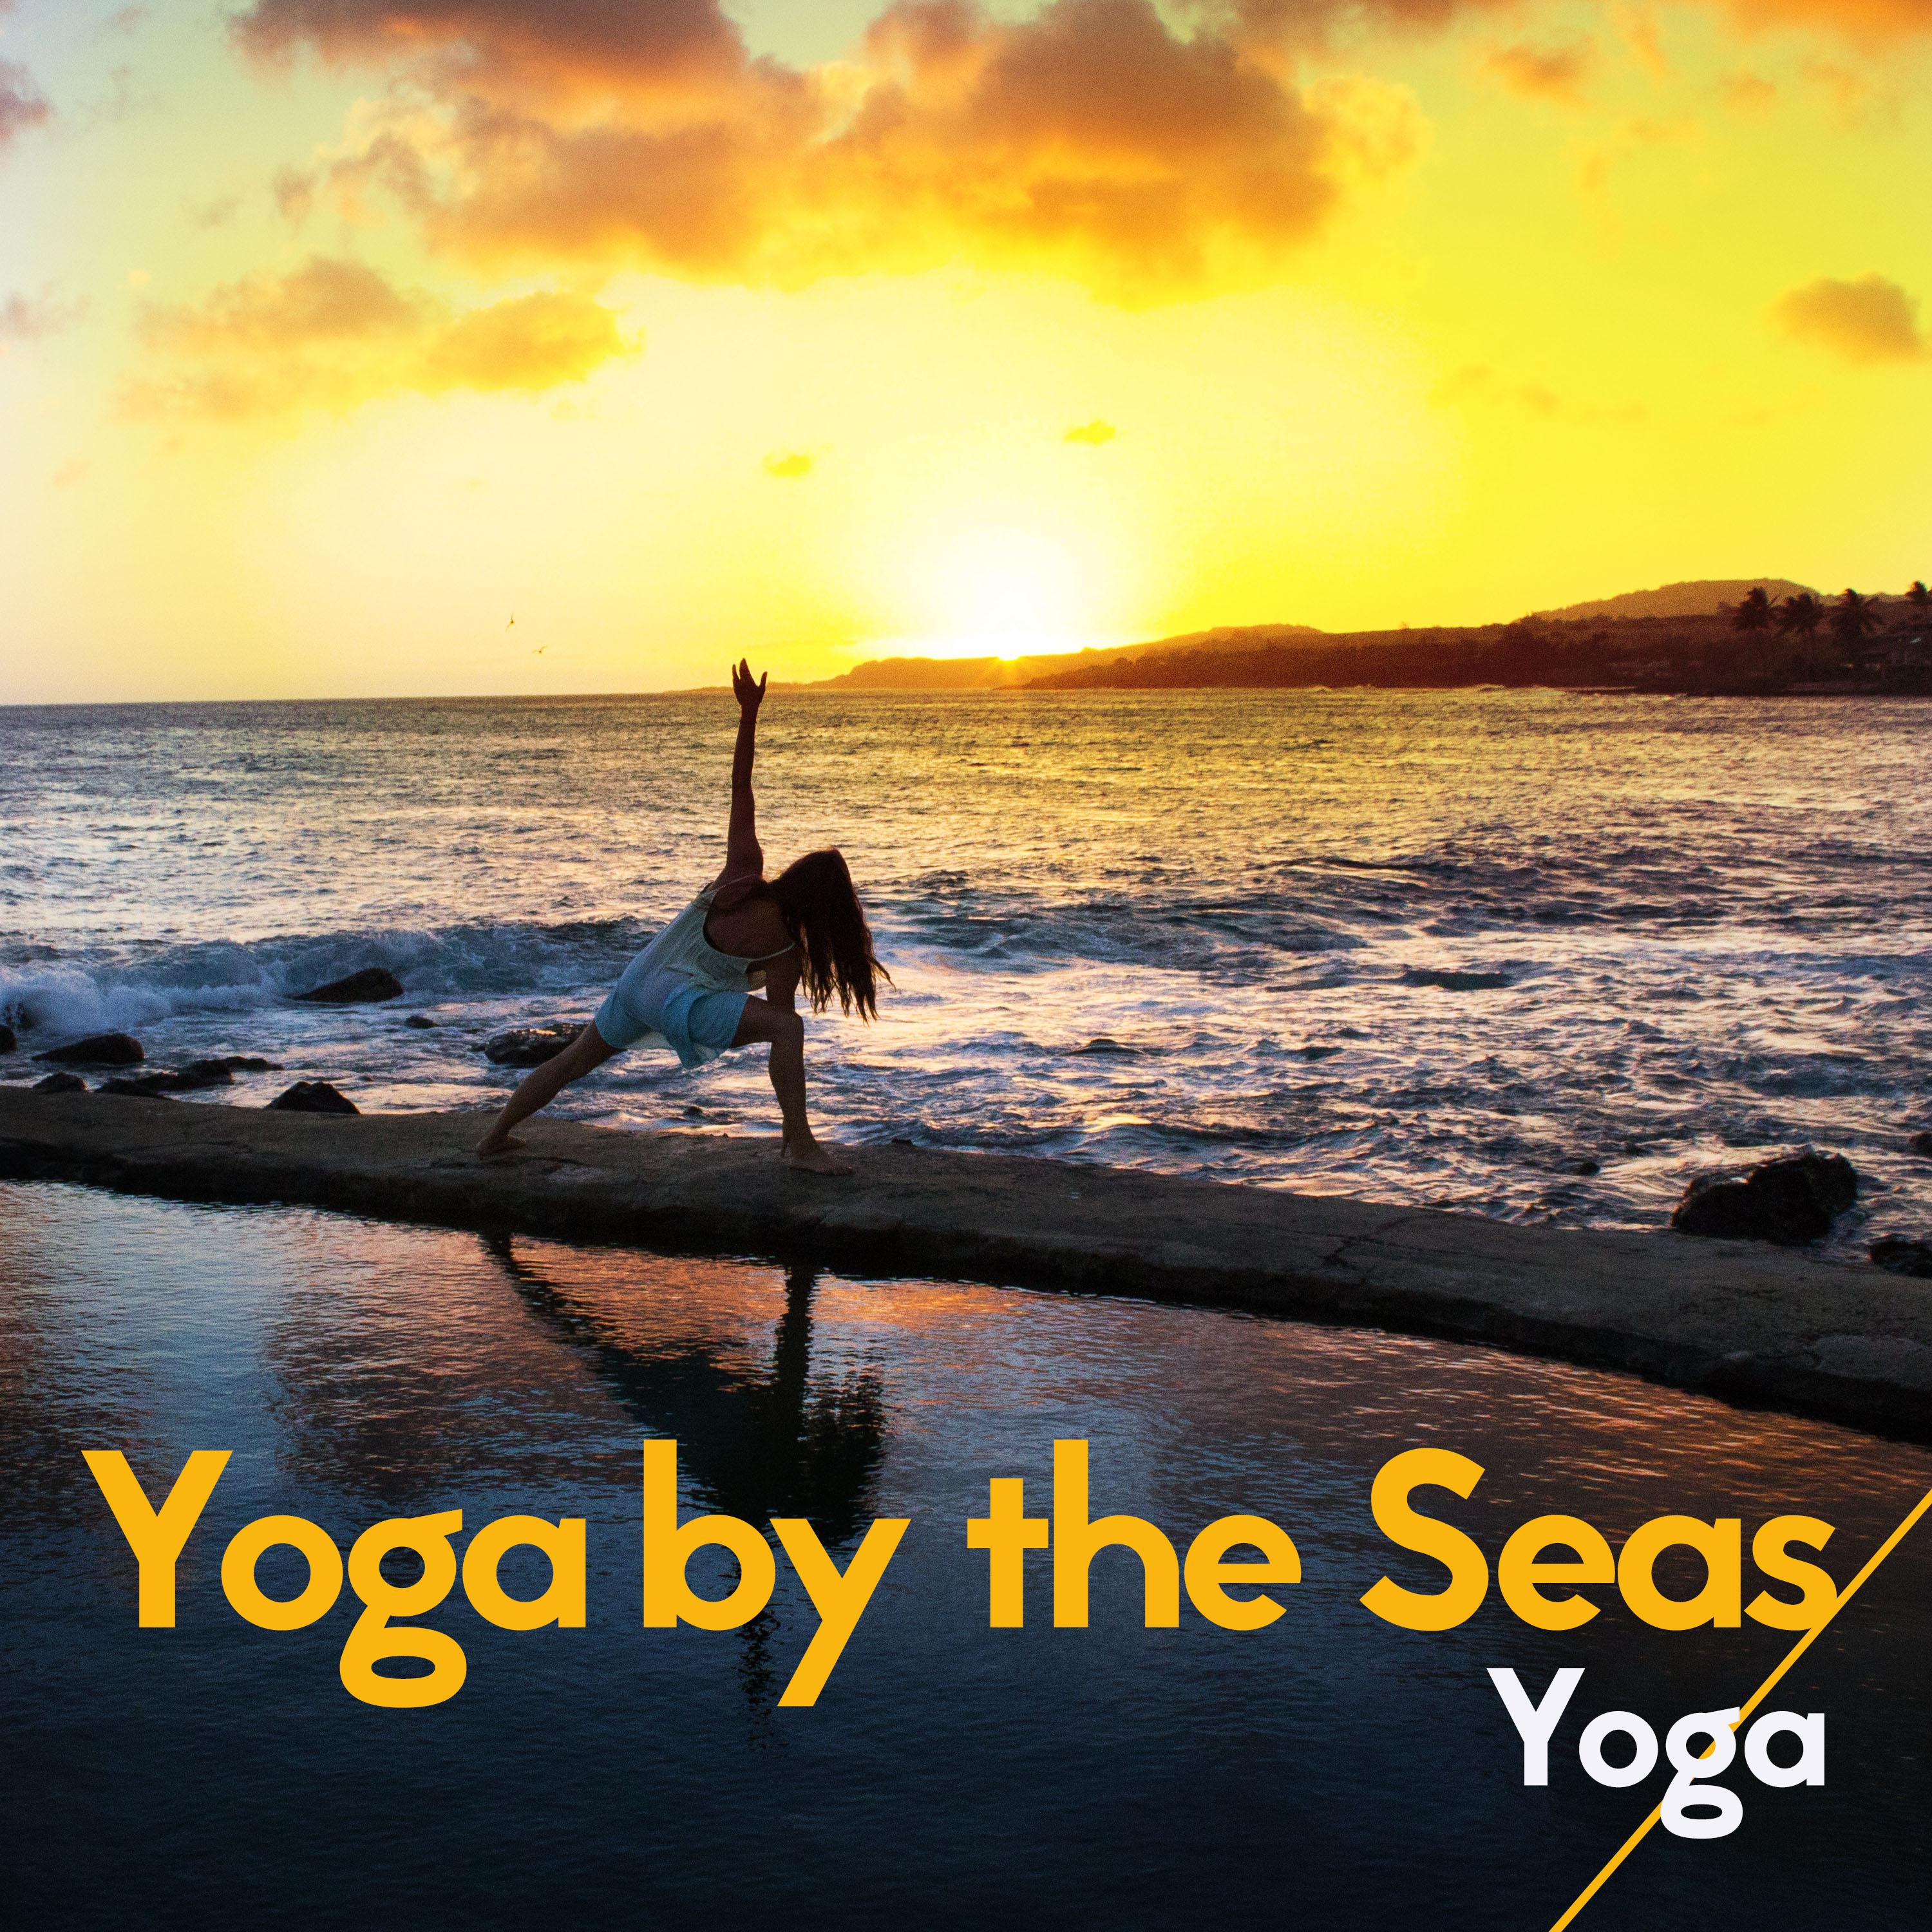 Yoga by the Seas